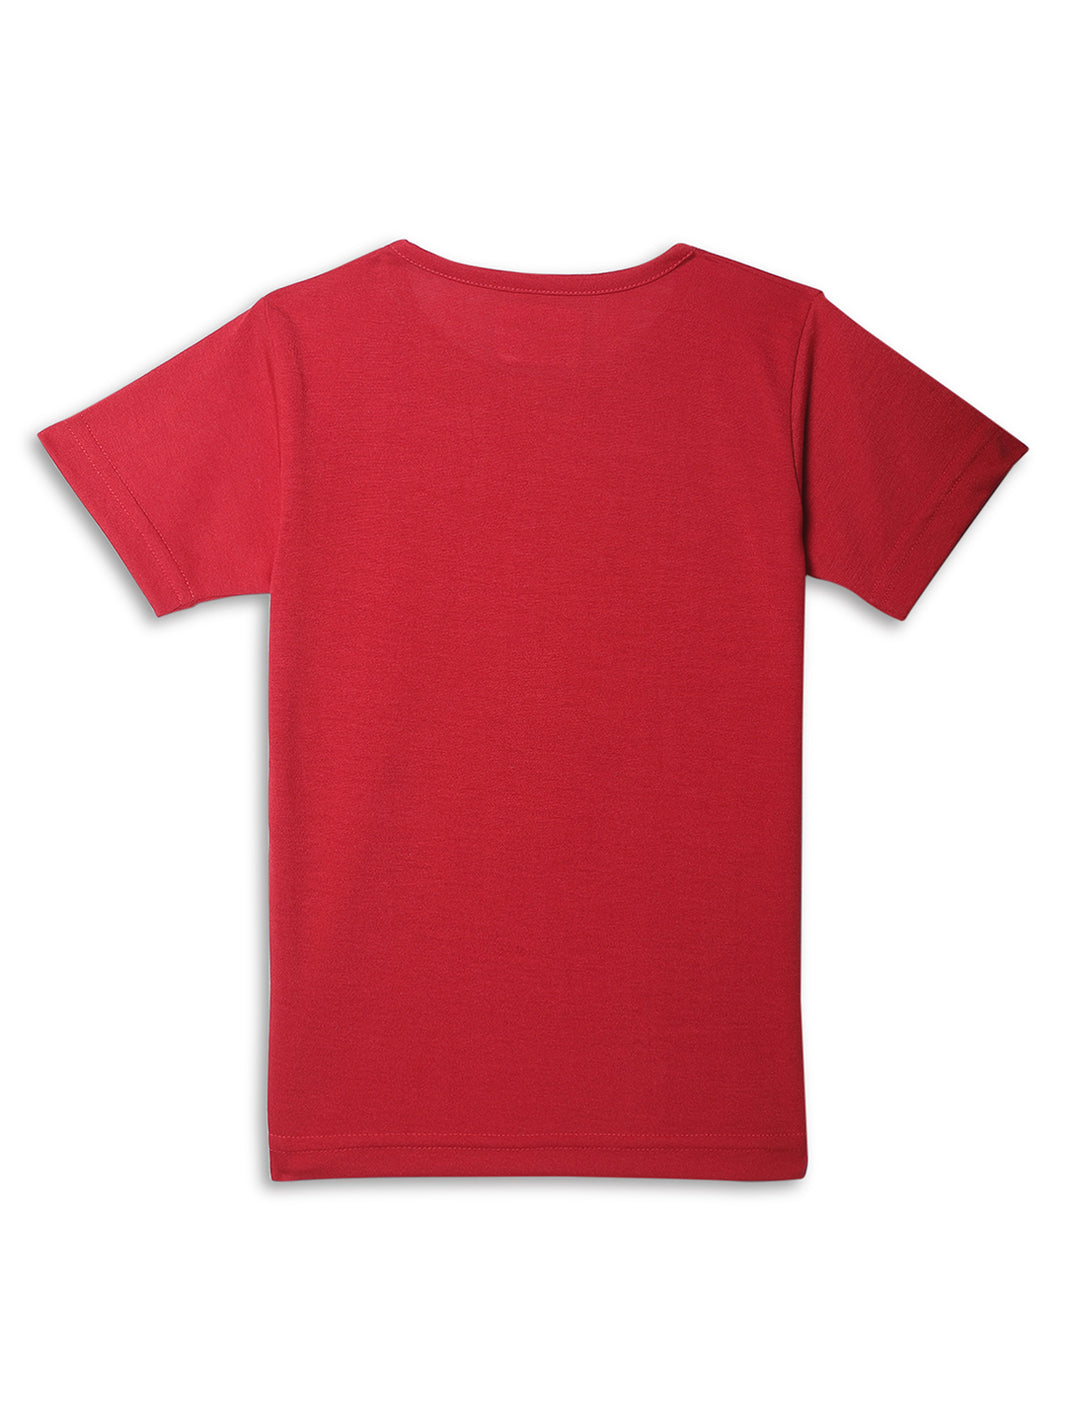 Vimal Jonney Printed  Red  Regular Fit Cotton blended T-shirts For Kids